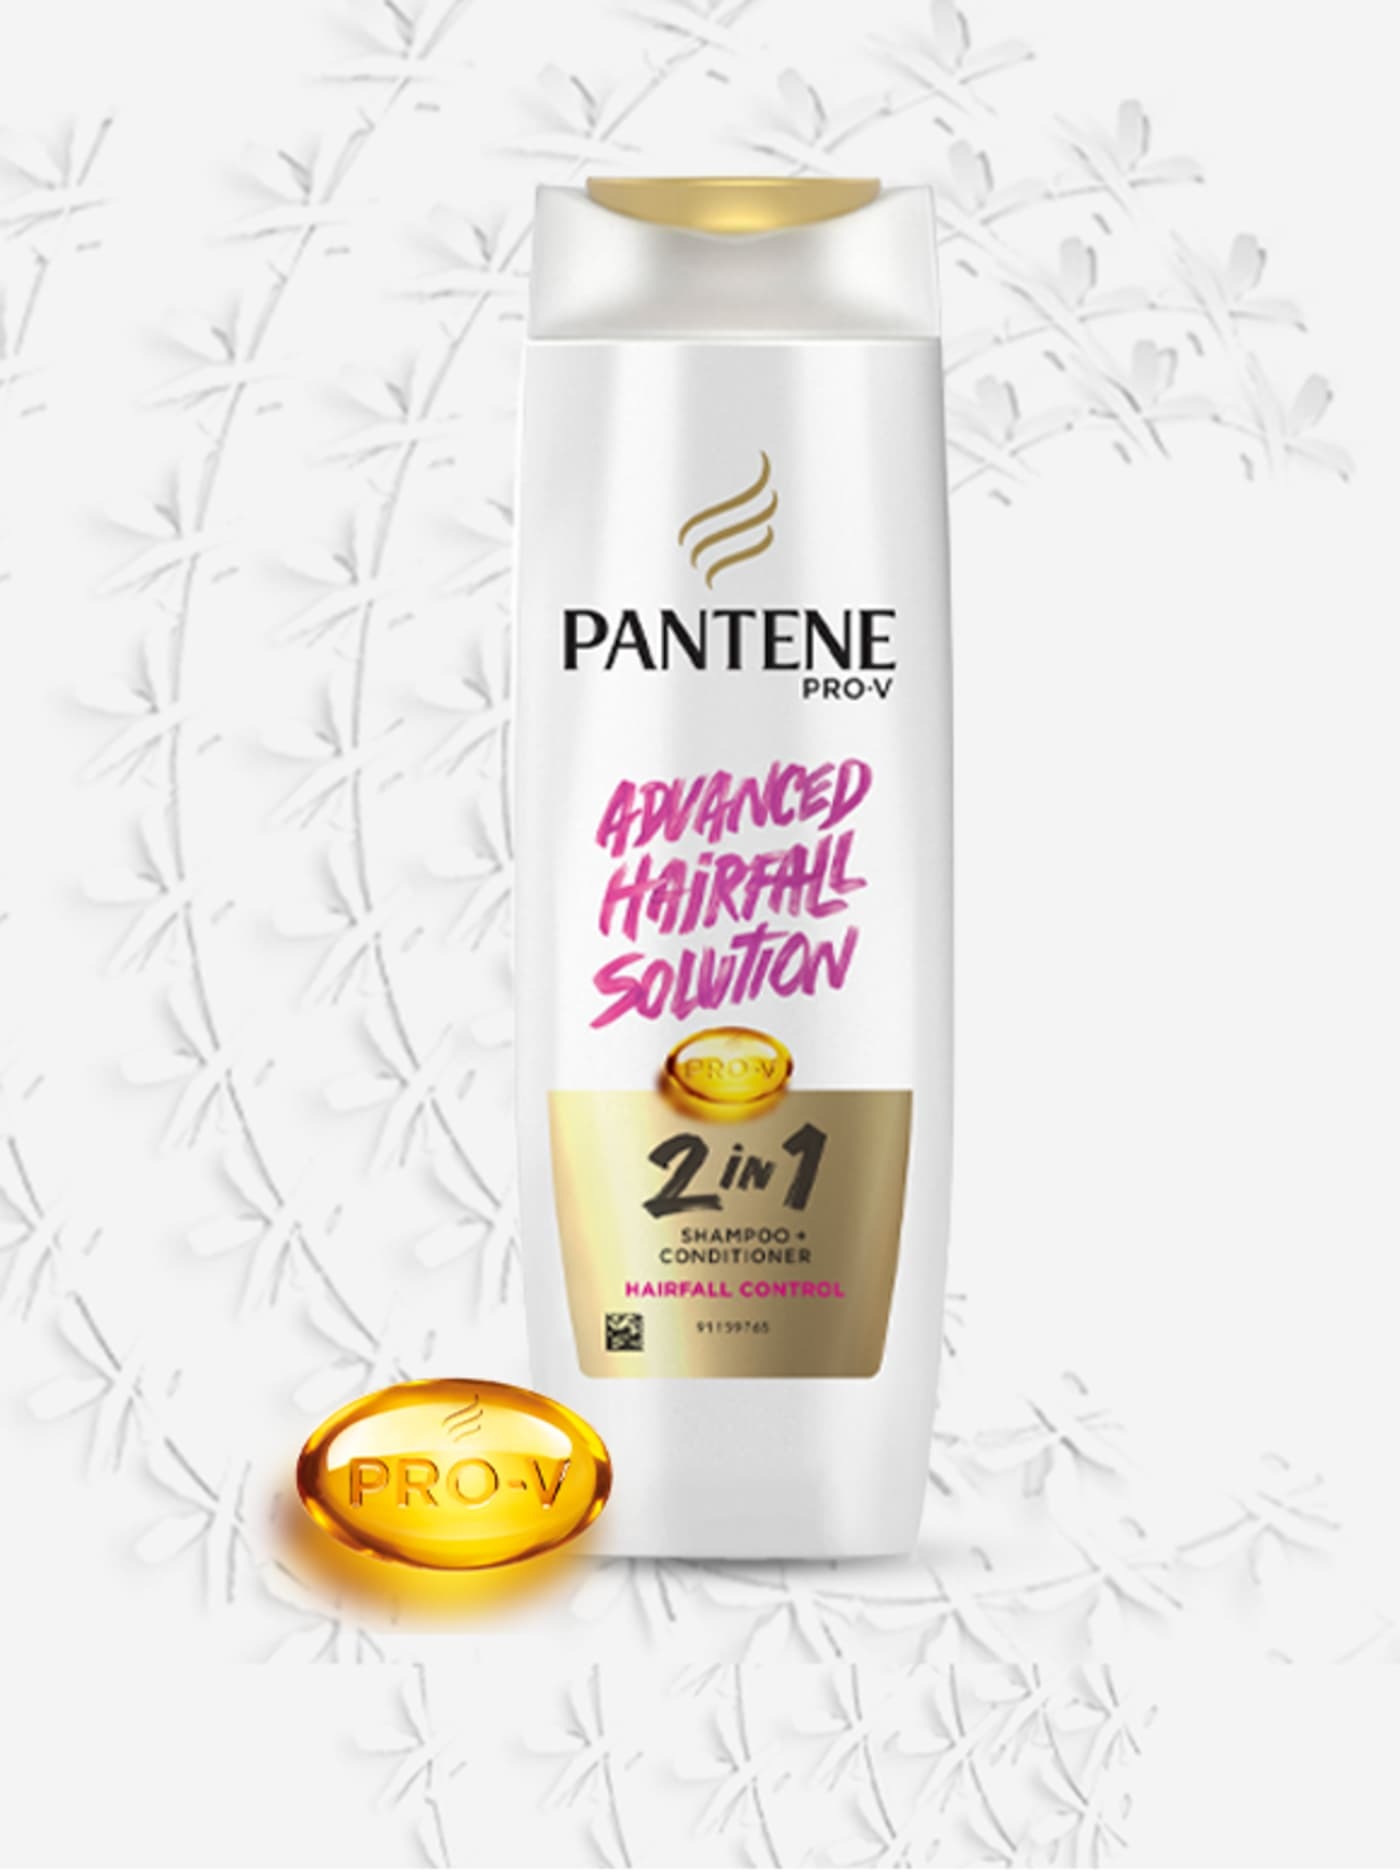 Shampoo brands in India - Pantene 